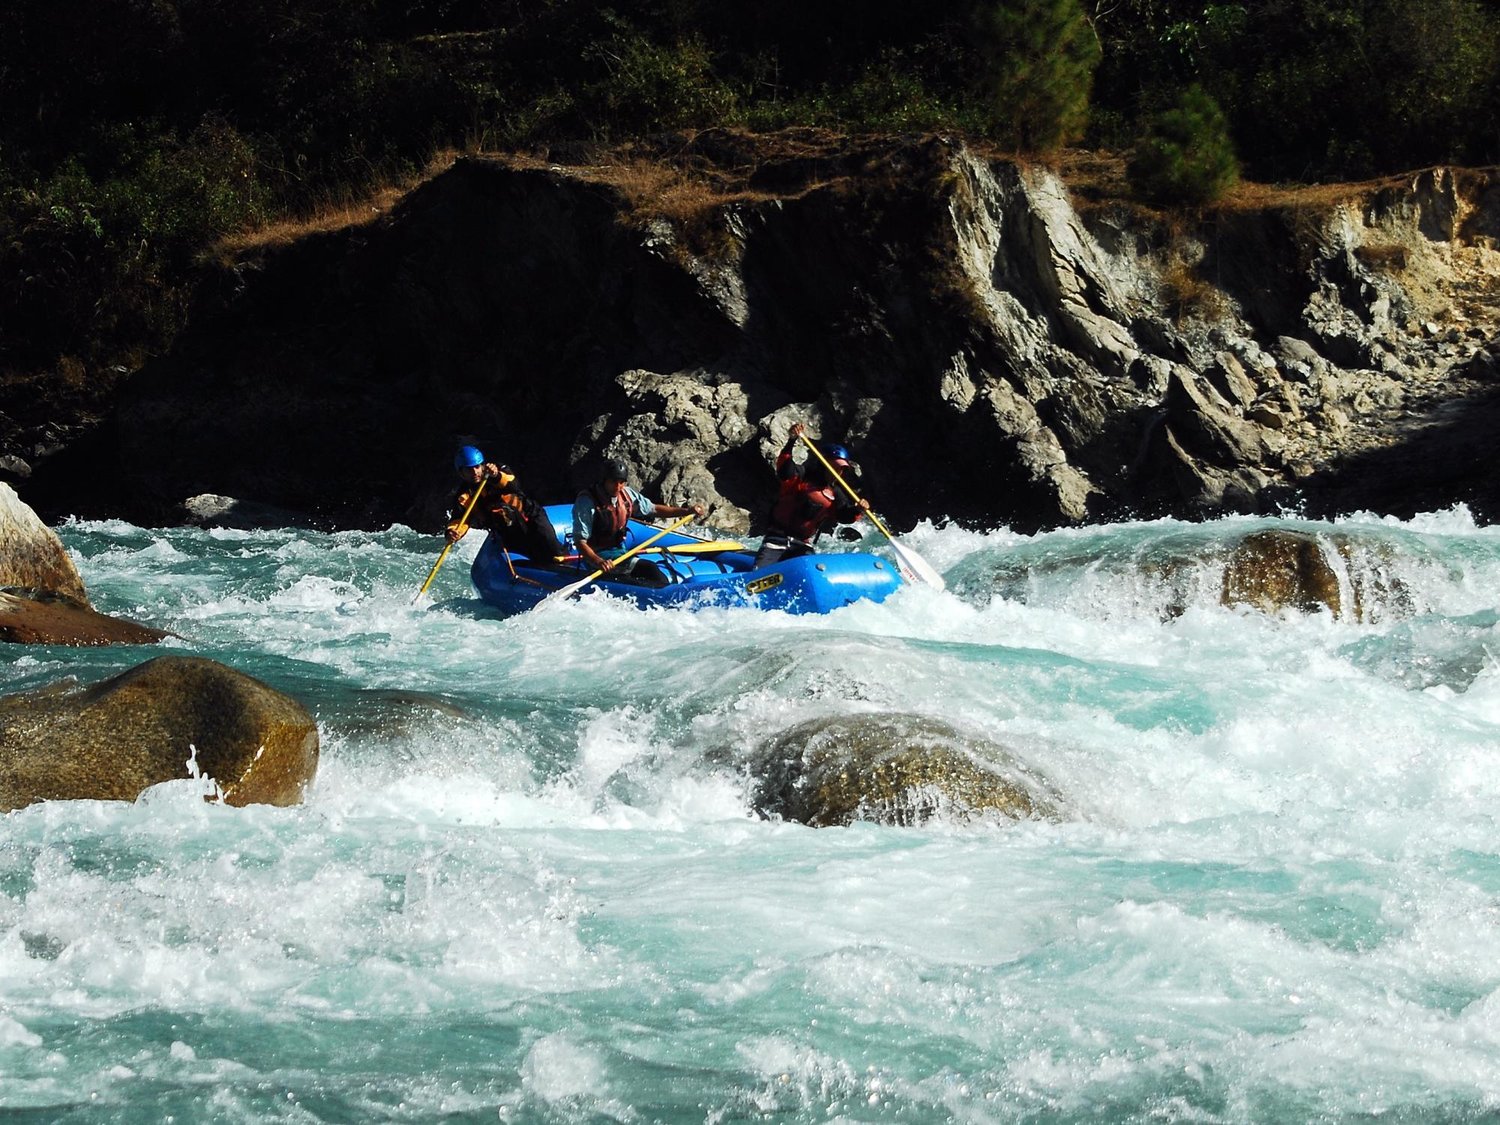 Top 10 River Rafting Destinations in India - Rishikesh, Kolad, Kullu Manali - KreedOn